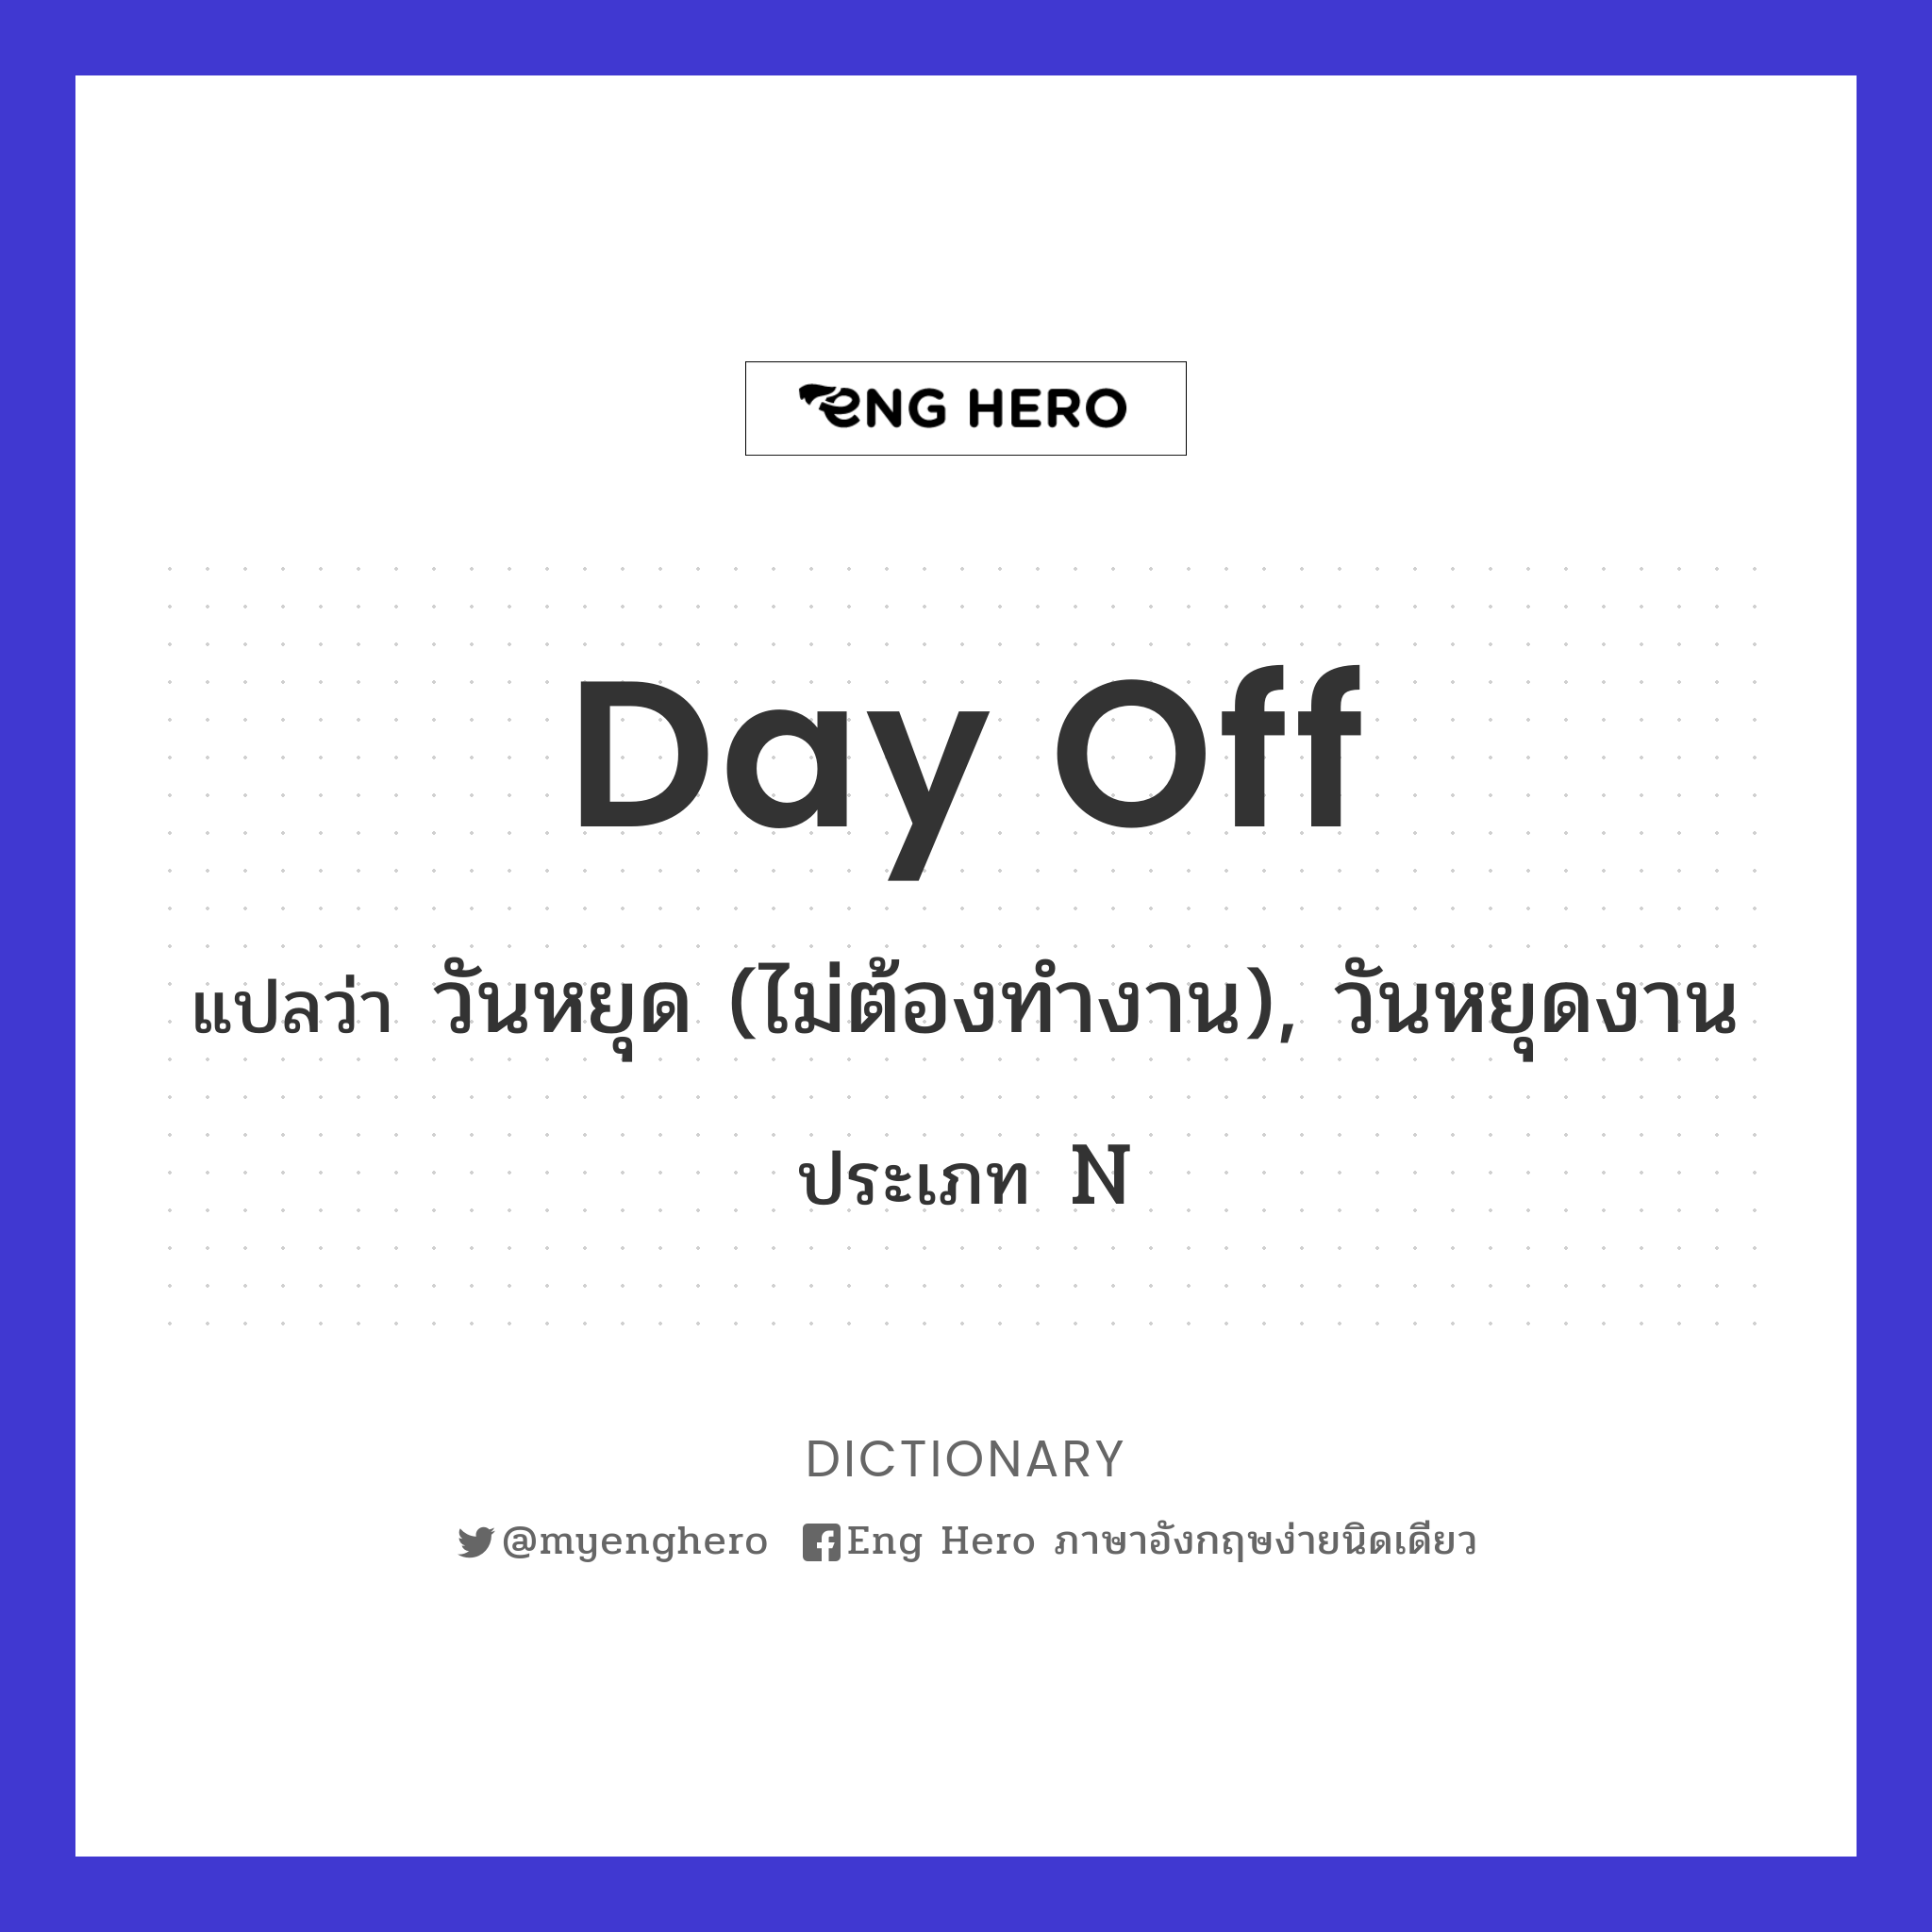 Day Off แปลว่า วันหยุด (ไม่ต้องทำงาน), วันหยุดงาน | Eng Hero เรียนภาษาอังกฤษ  ออนไลน์ ฟรี